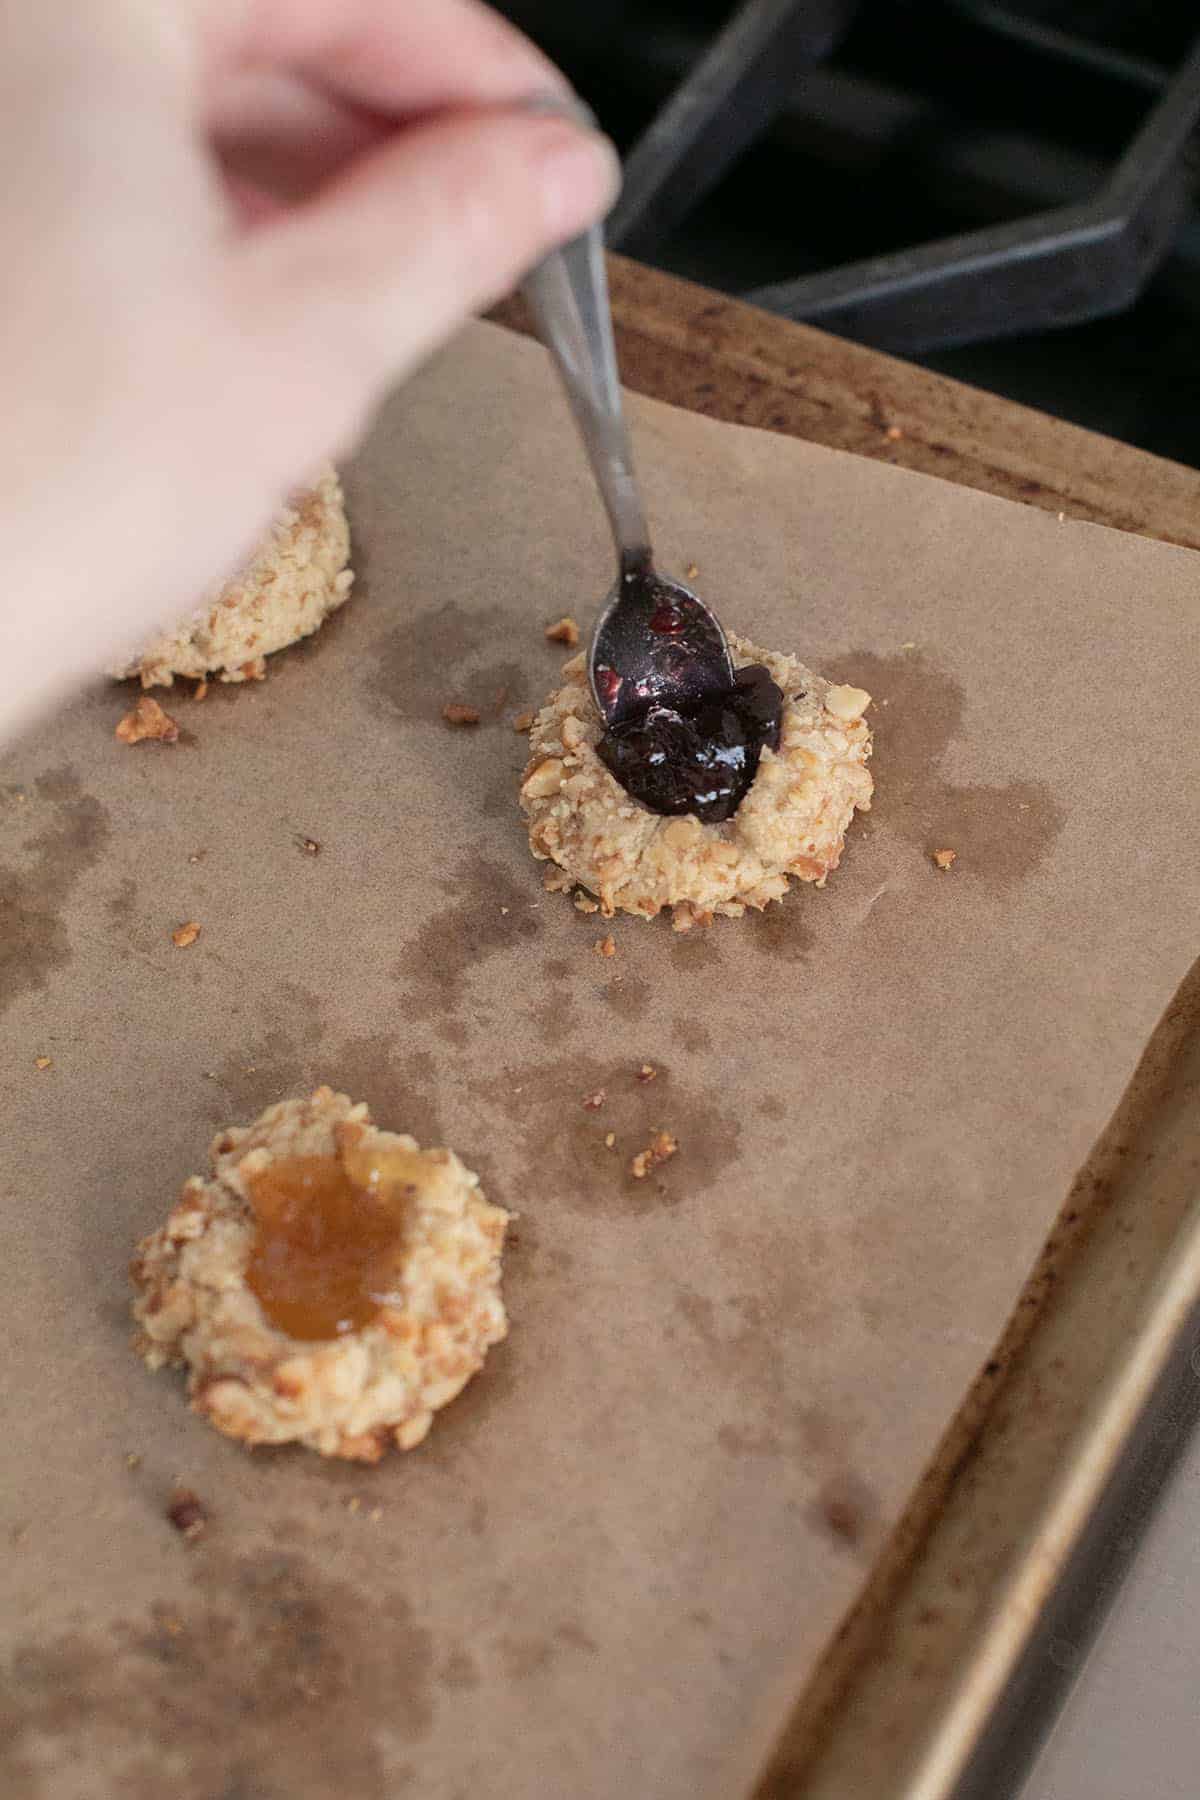 thumbprint cookie recipe with jam 